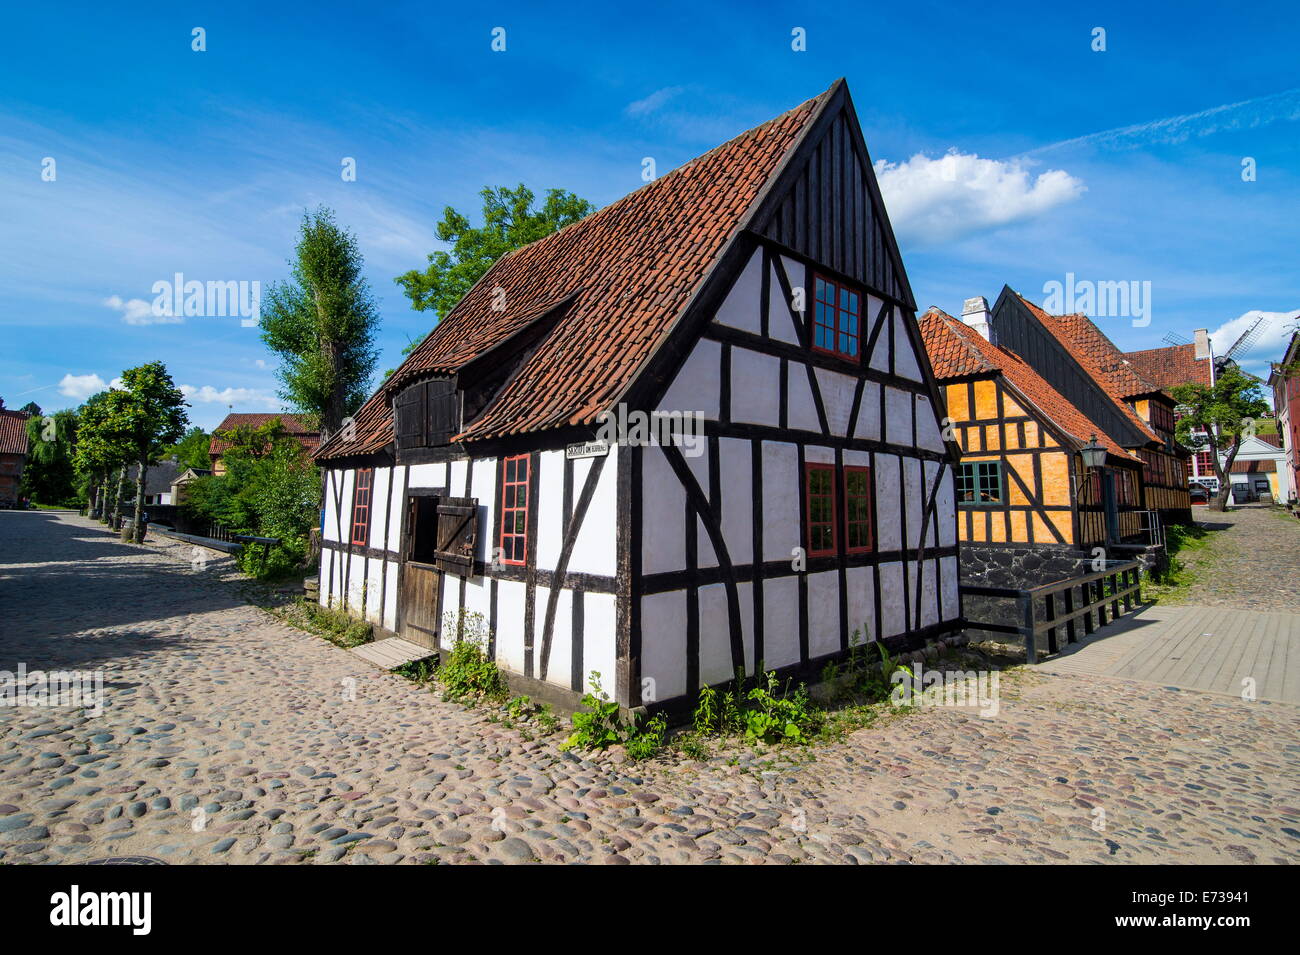 The Old Town, Den Gamle By, open air museum in Aarhus, Denmark, Scandinavia, Europe Stock Photo